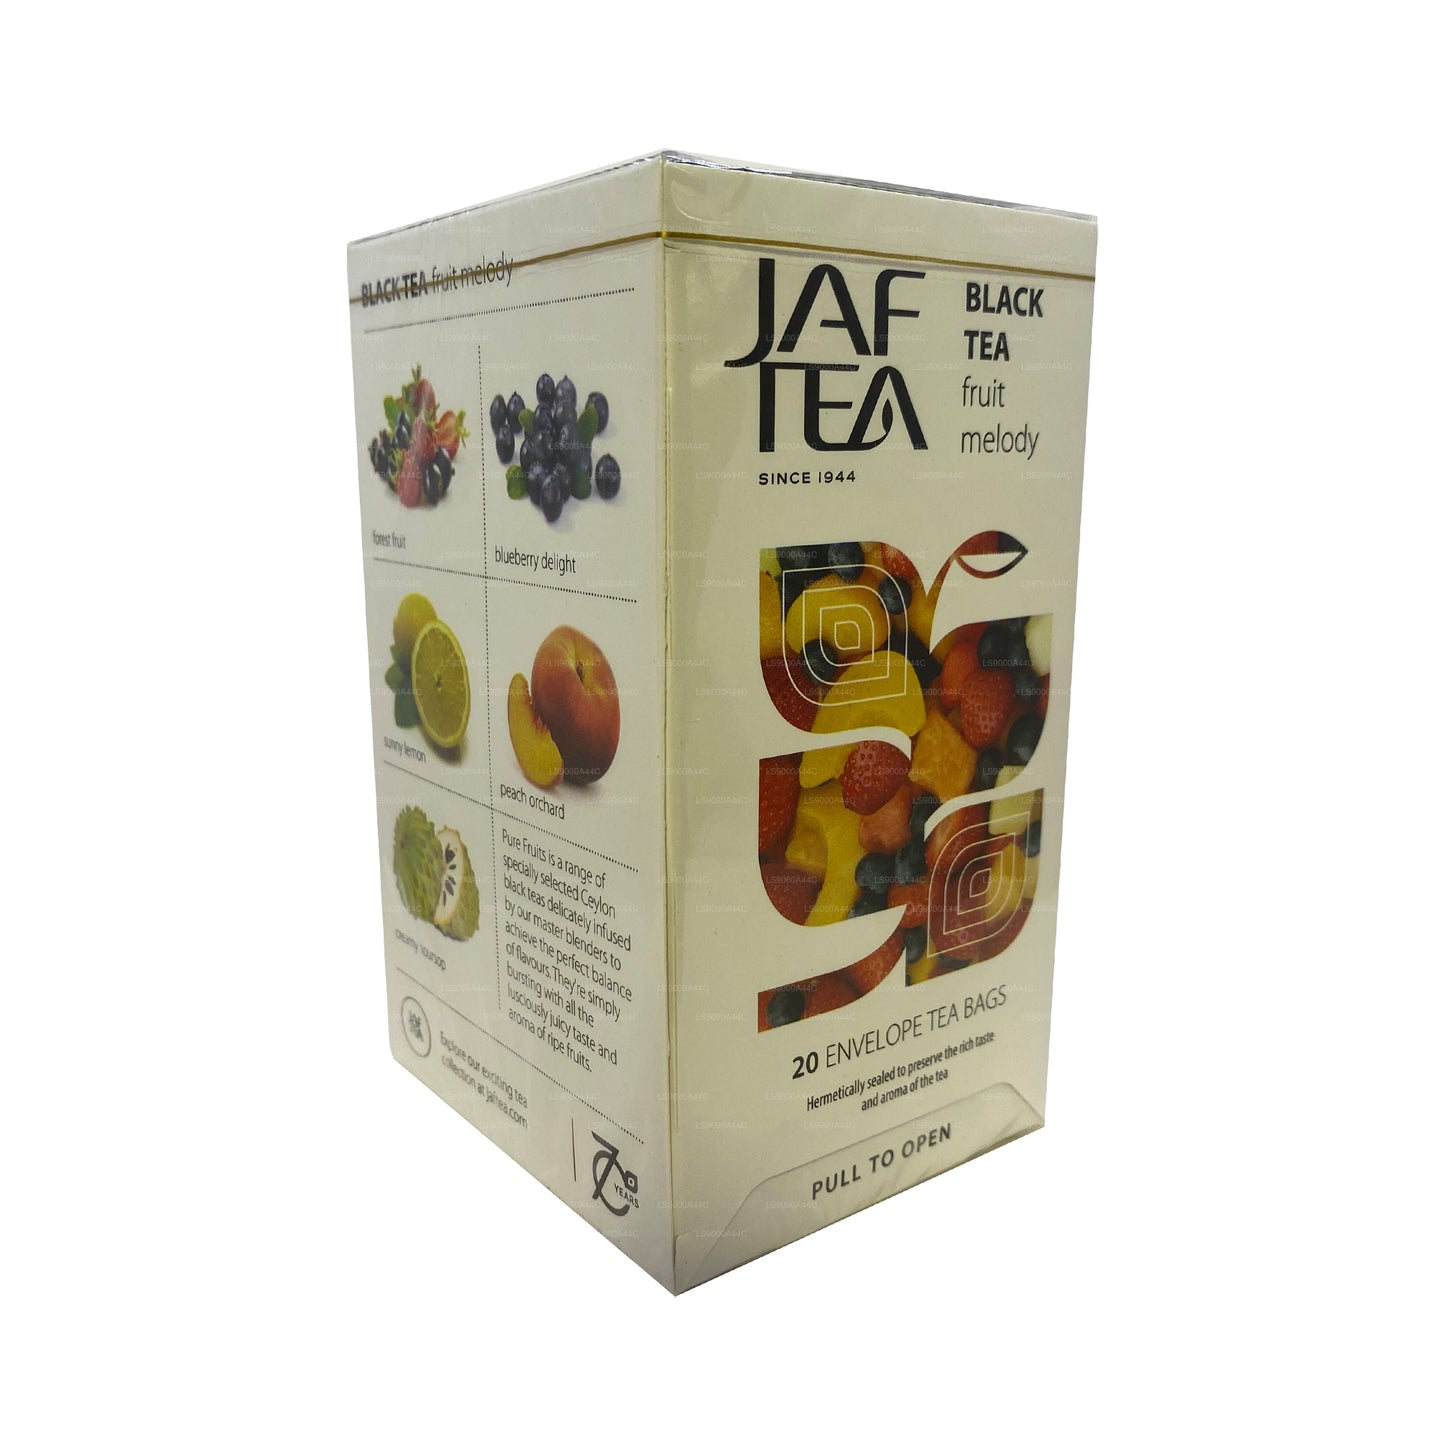 Jaf Tea ピュアフルーツコレクションブラックティーフルーツメロディ (30g) 20ティーバッグ